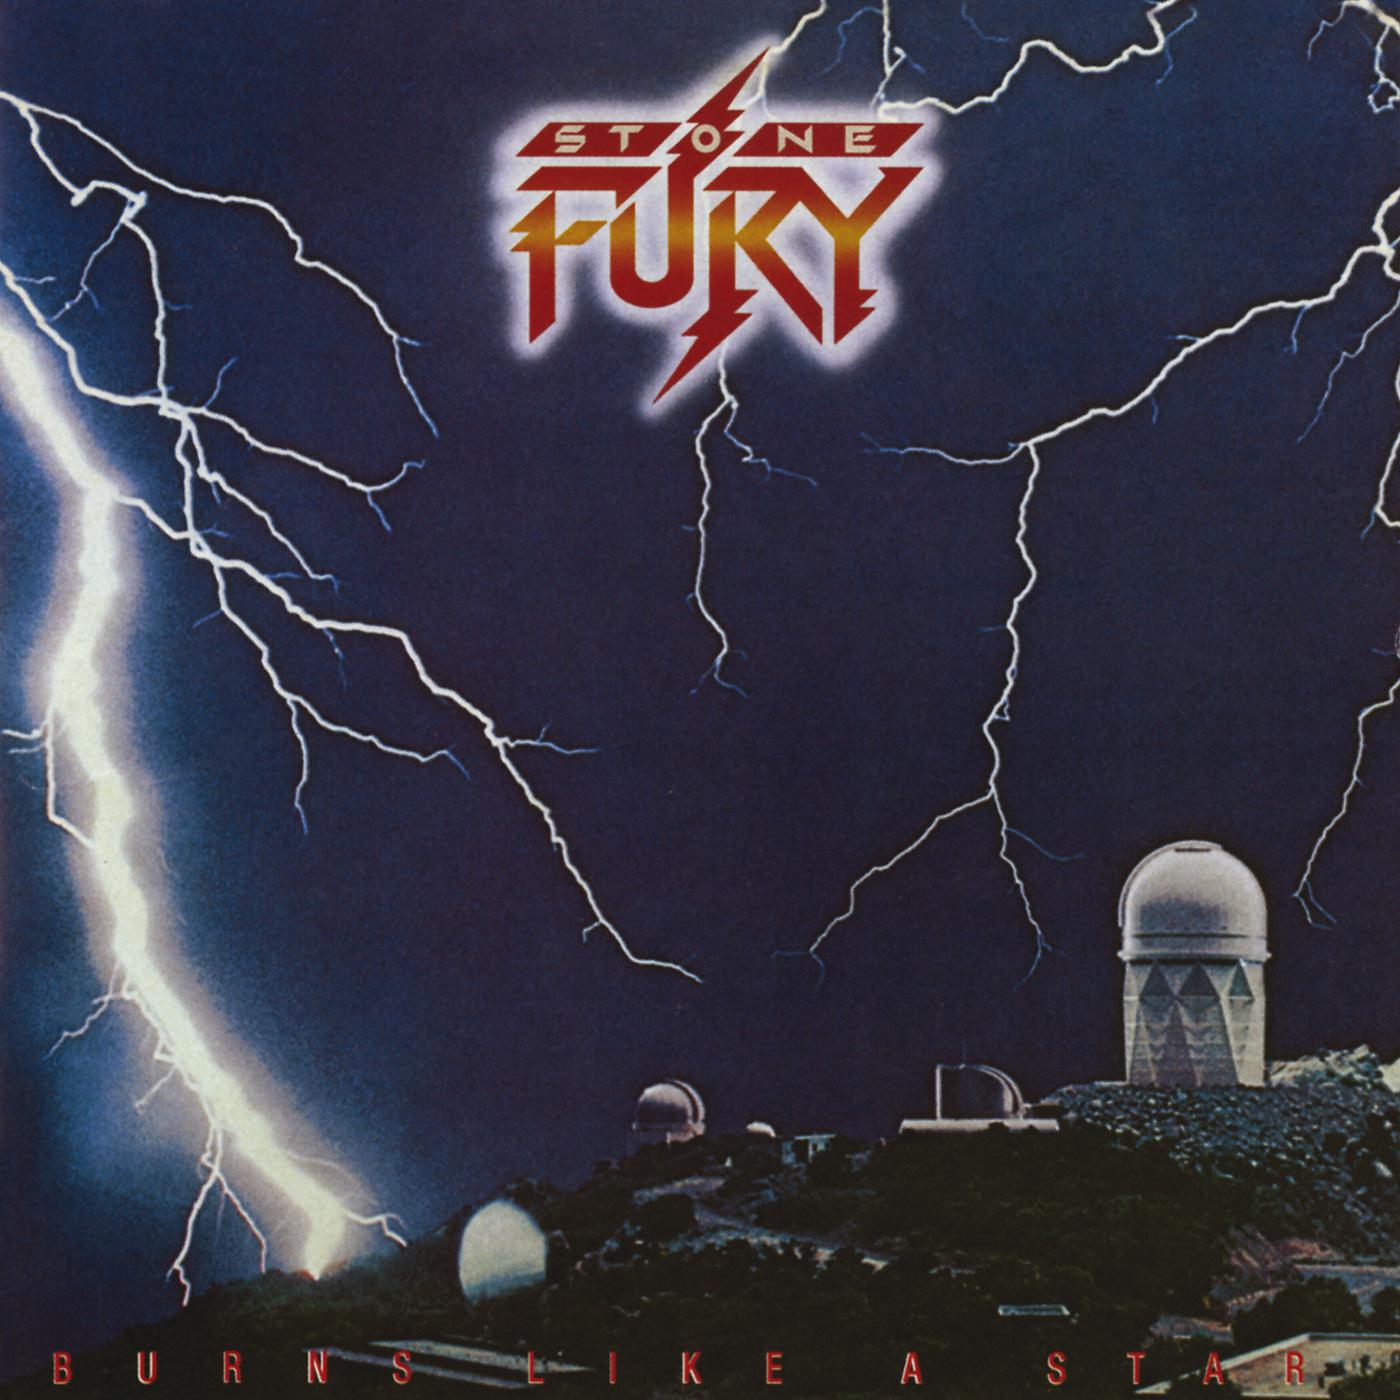 Stone fury. Stone Fury Burns like a Star 1984. Stone Fury Band. Stone Fury 1986. Stone Fury "Burns like a Star".